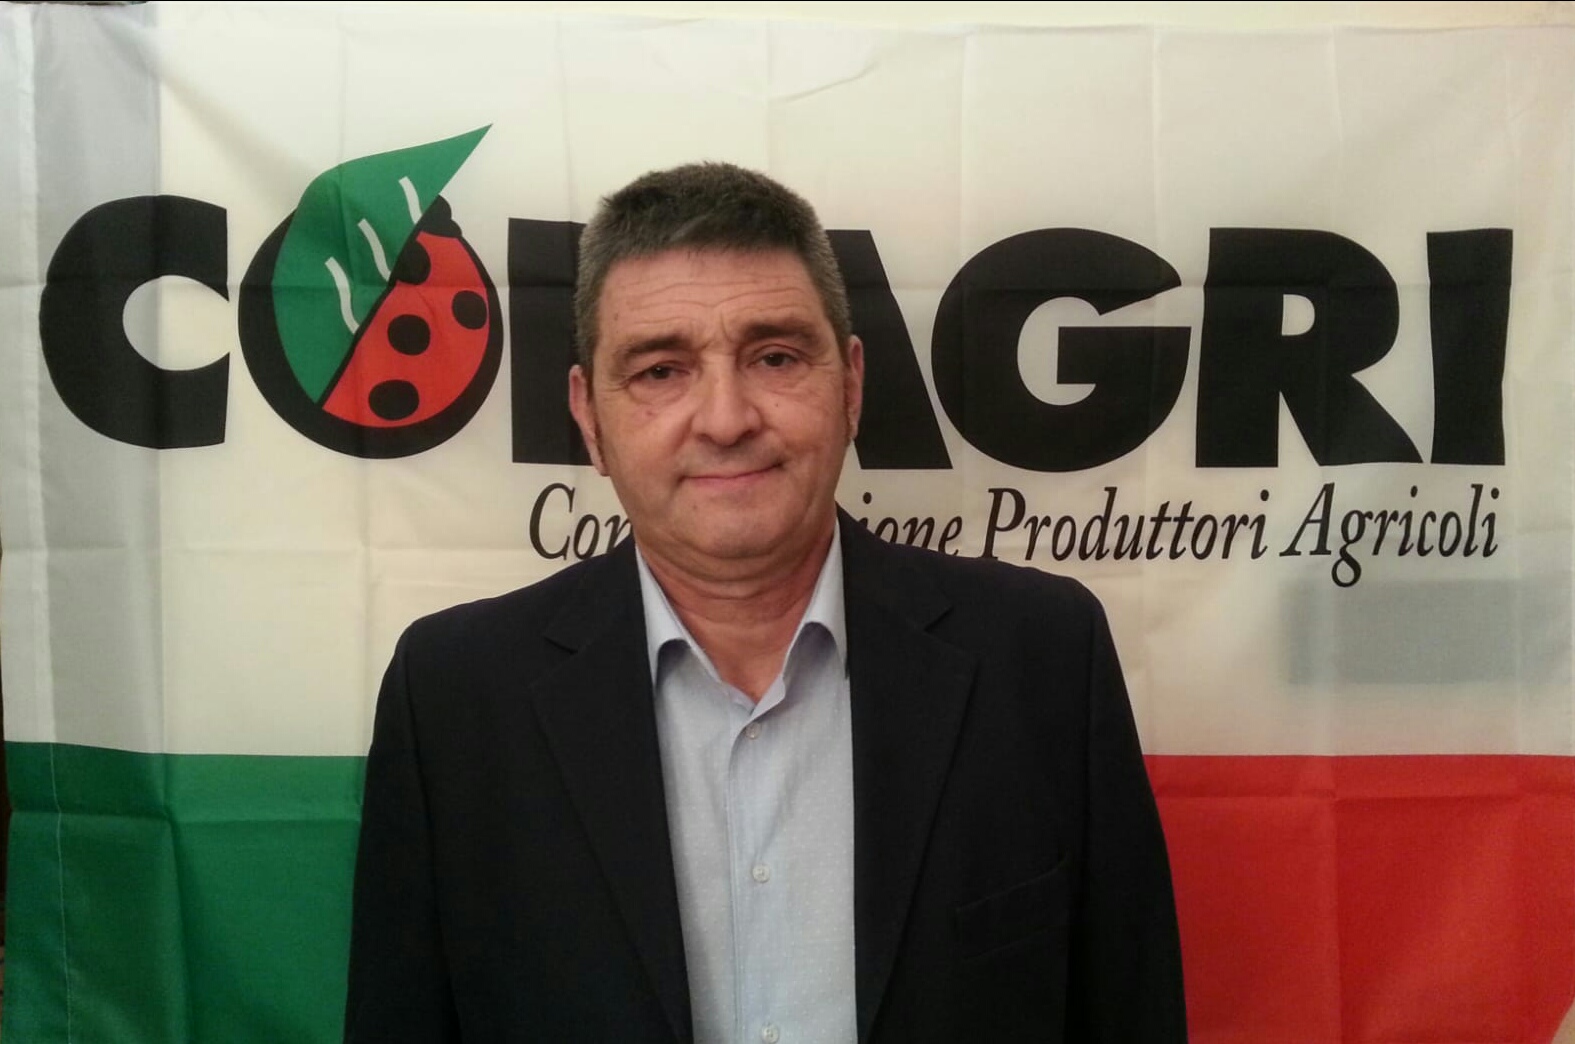 Cambio di Direttore in Copagri Sardegna, arriva Mario Putzolu